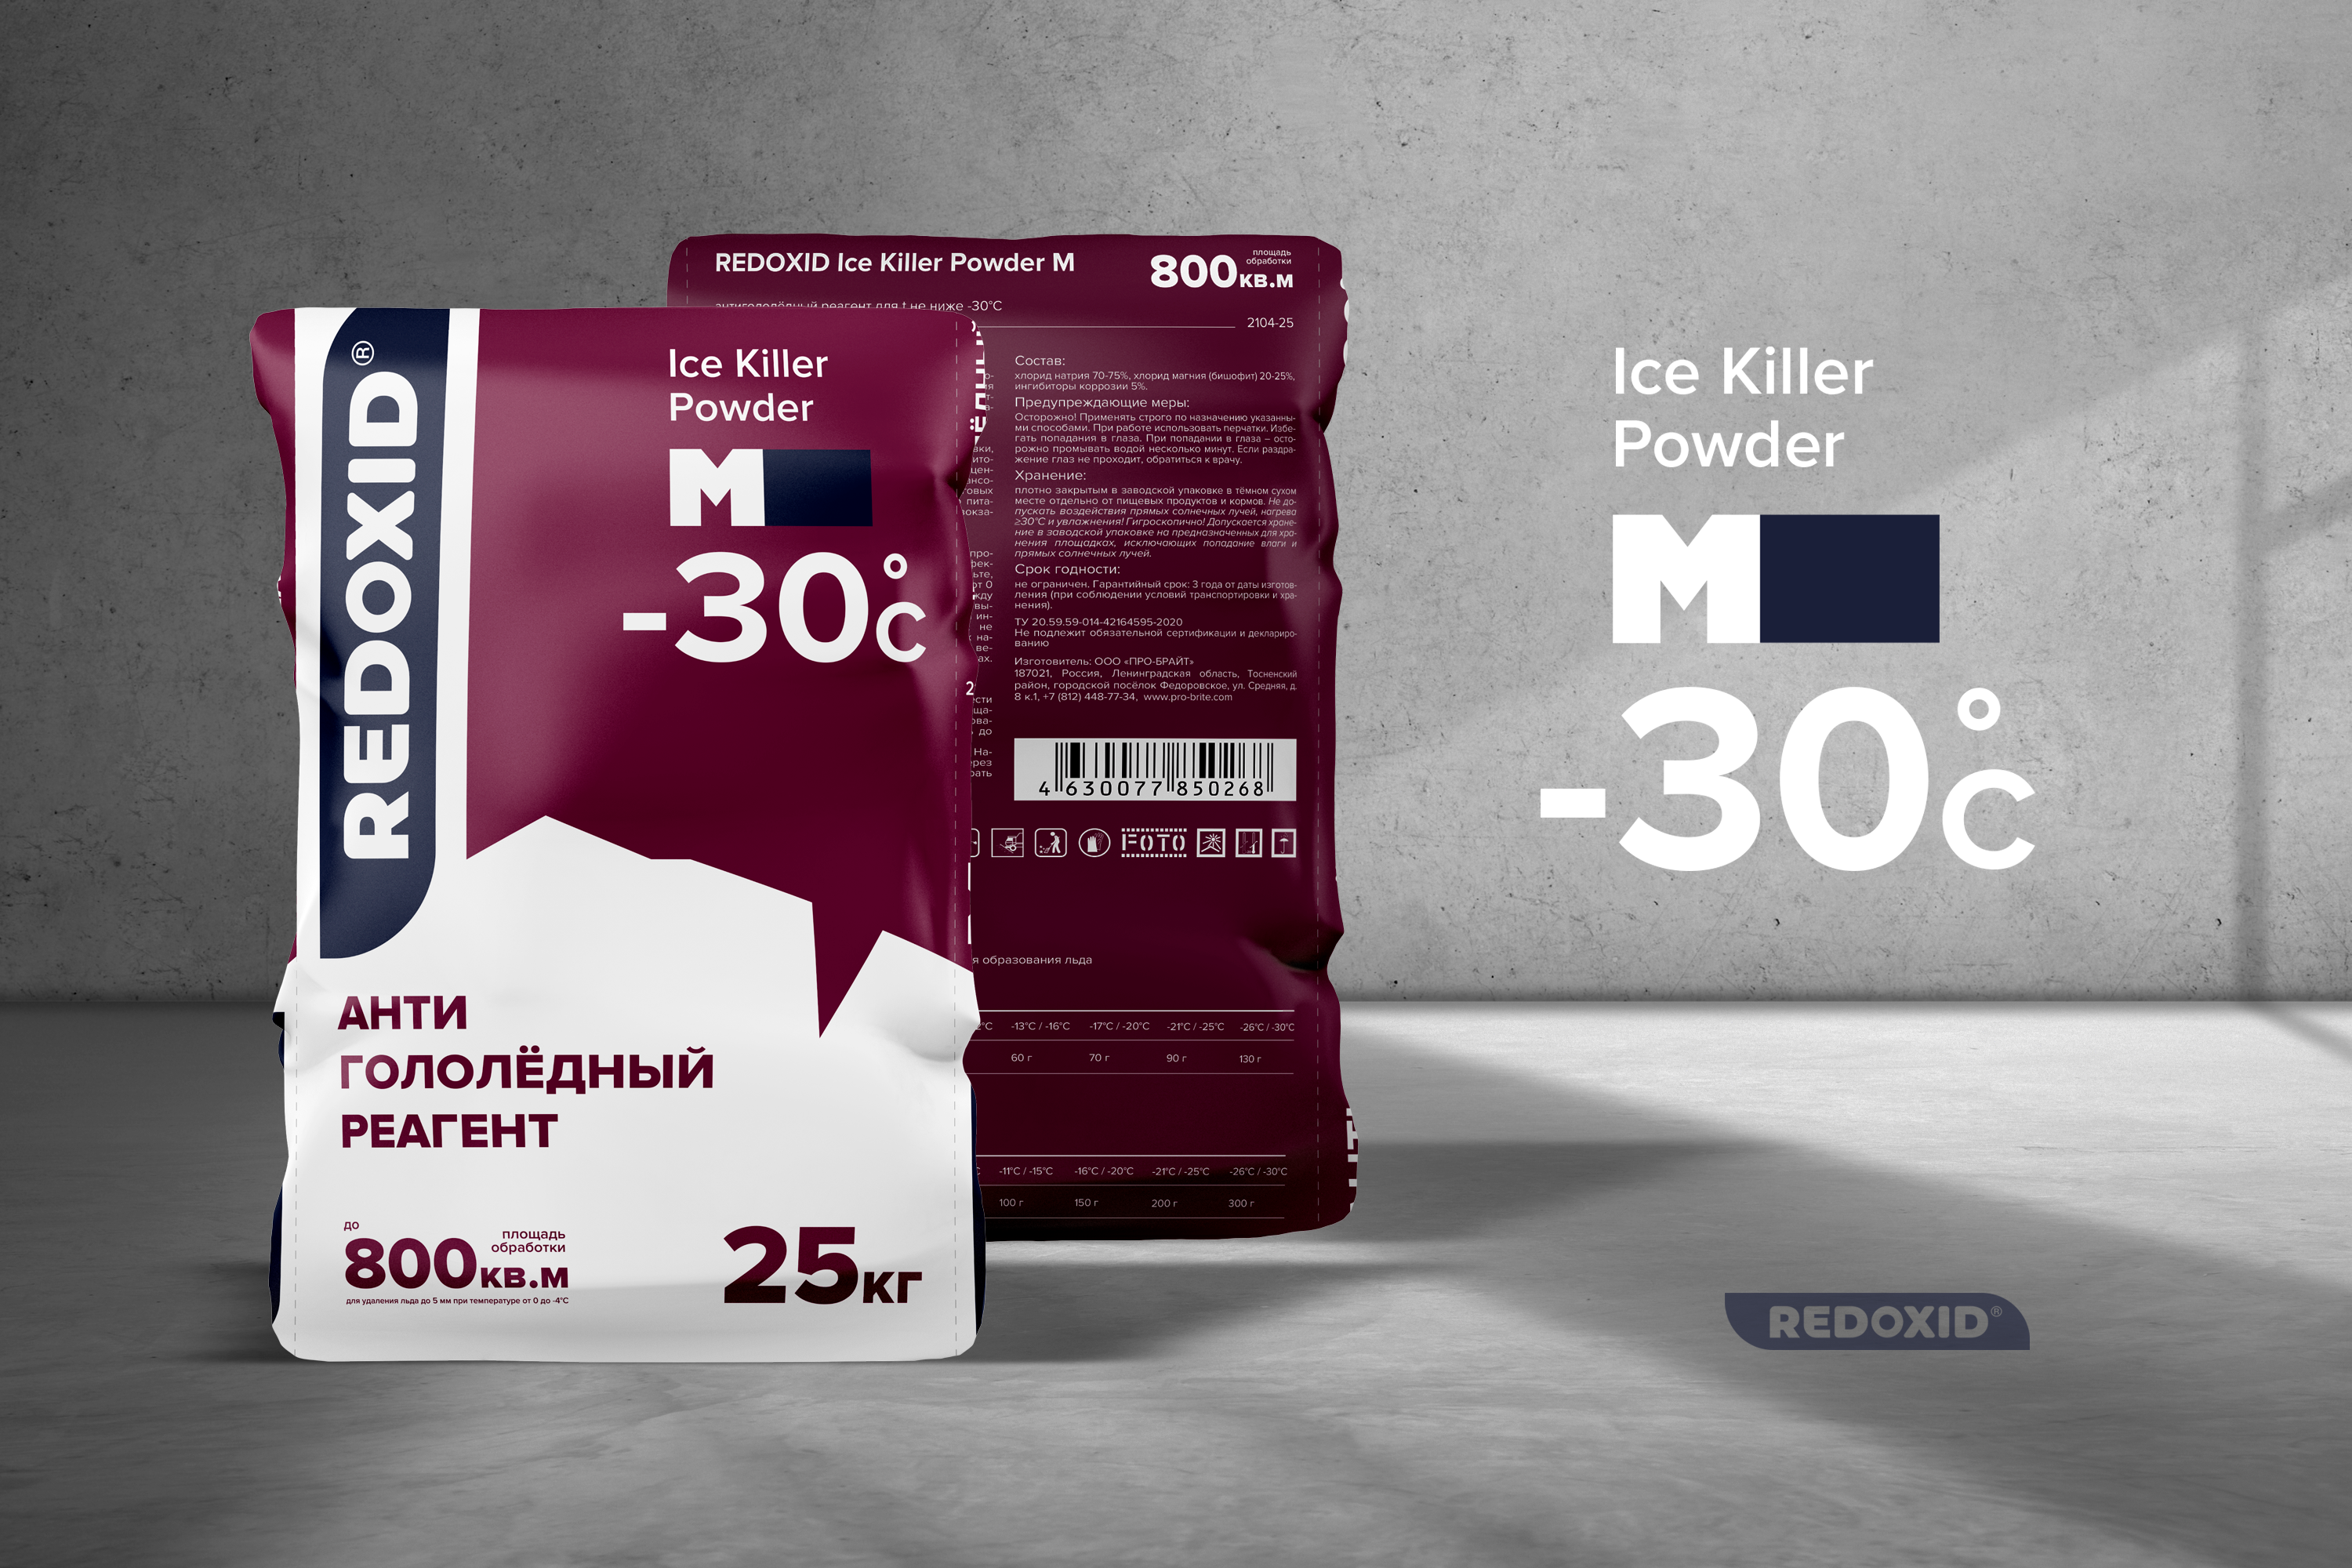 Антигололедный реагент - 30 °c, 25кг. Redoxid реагент. Противогололедный реагент "Ice Killer" -7°c 25кг. Антигололед реагент Pro-Brite. Powder killer